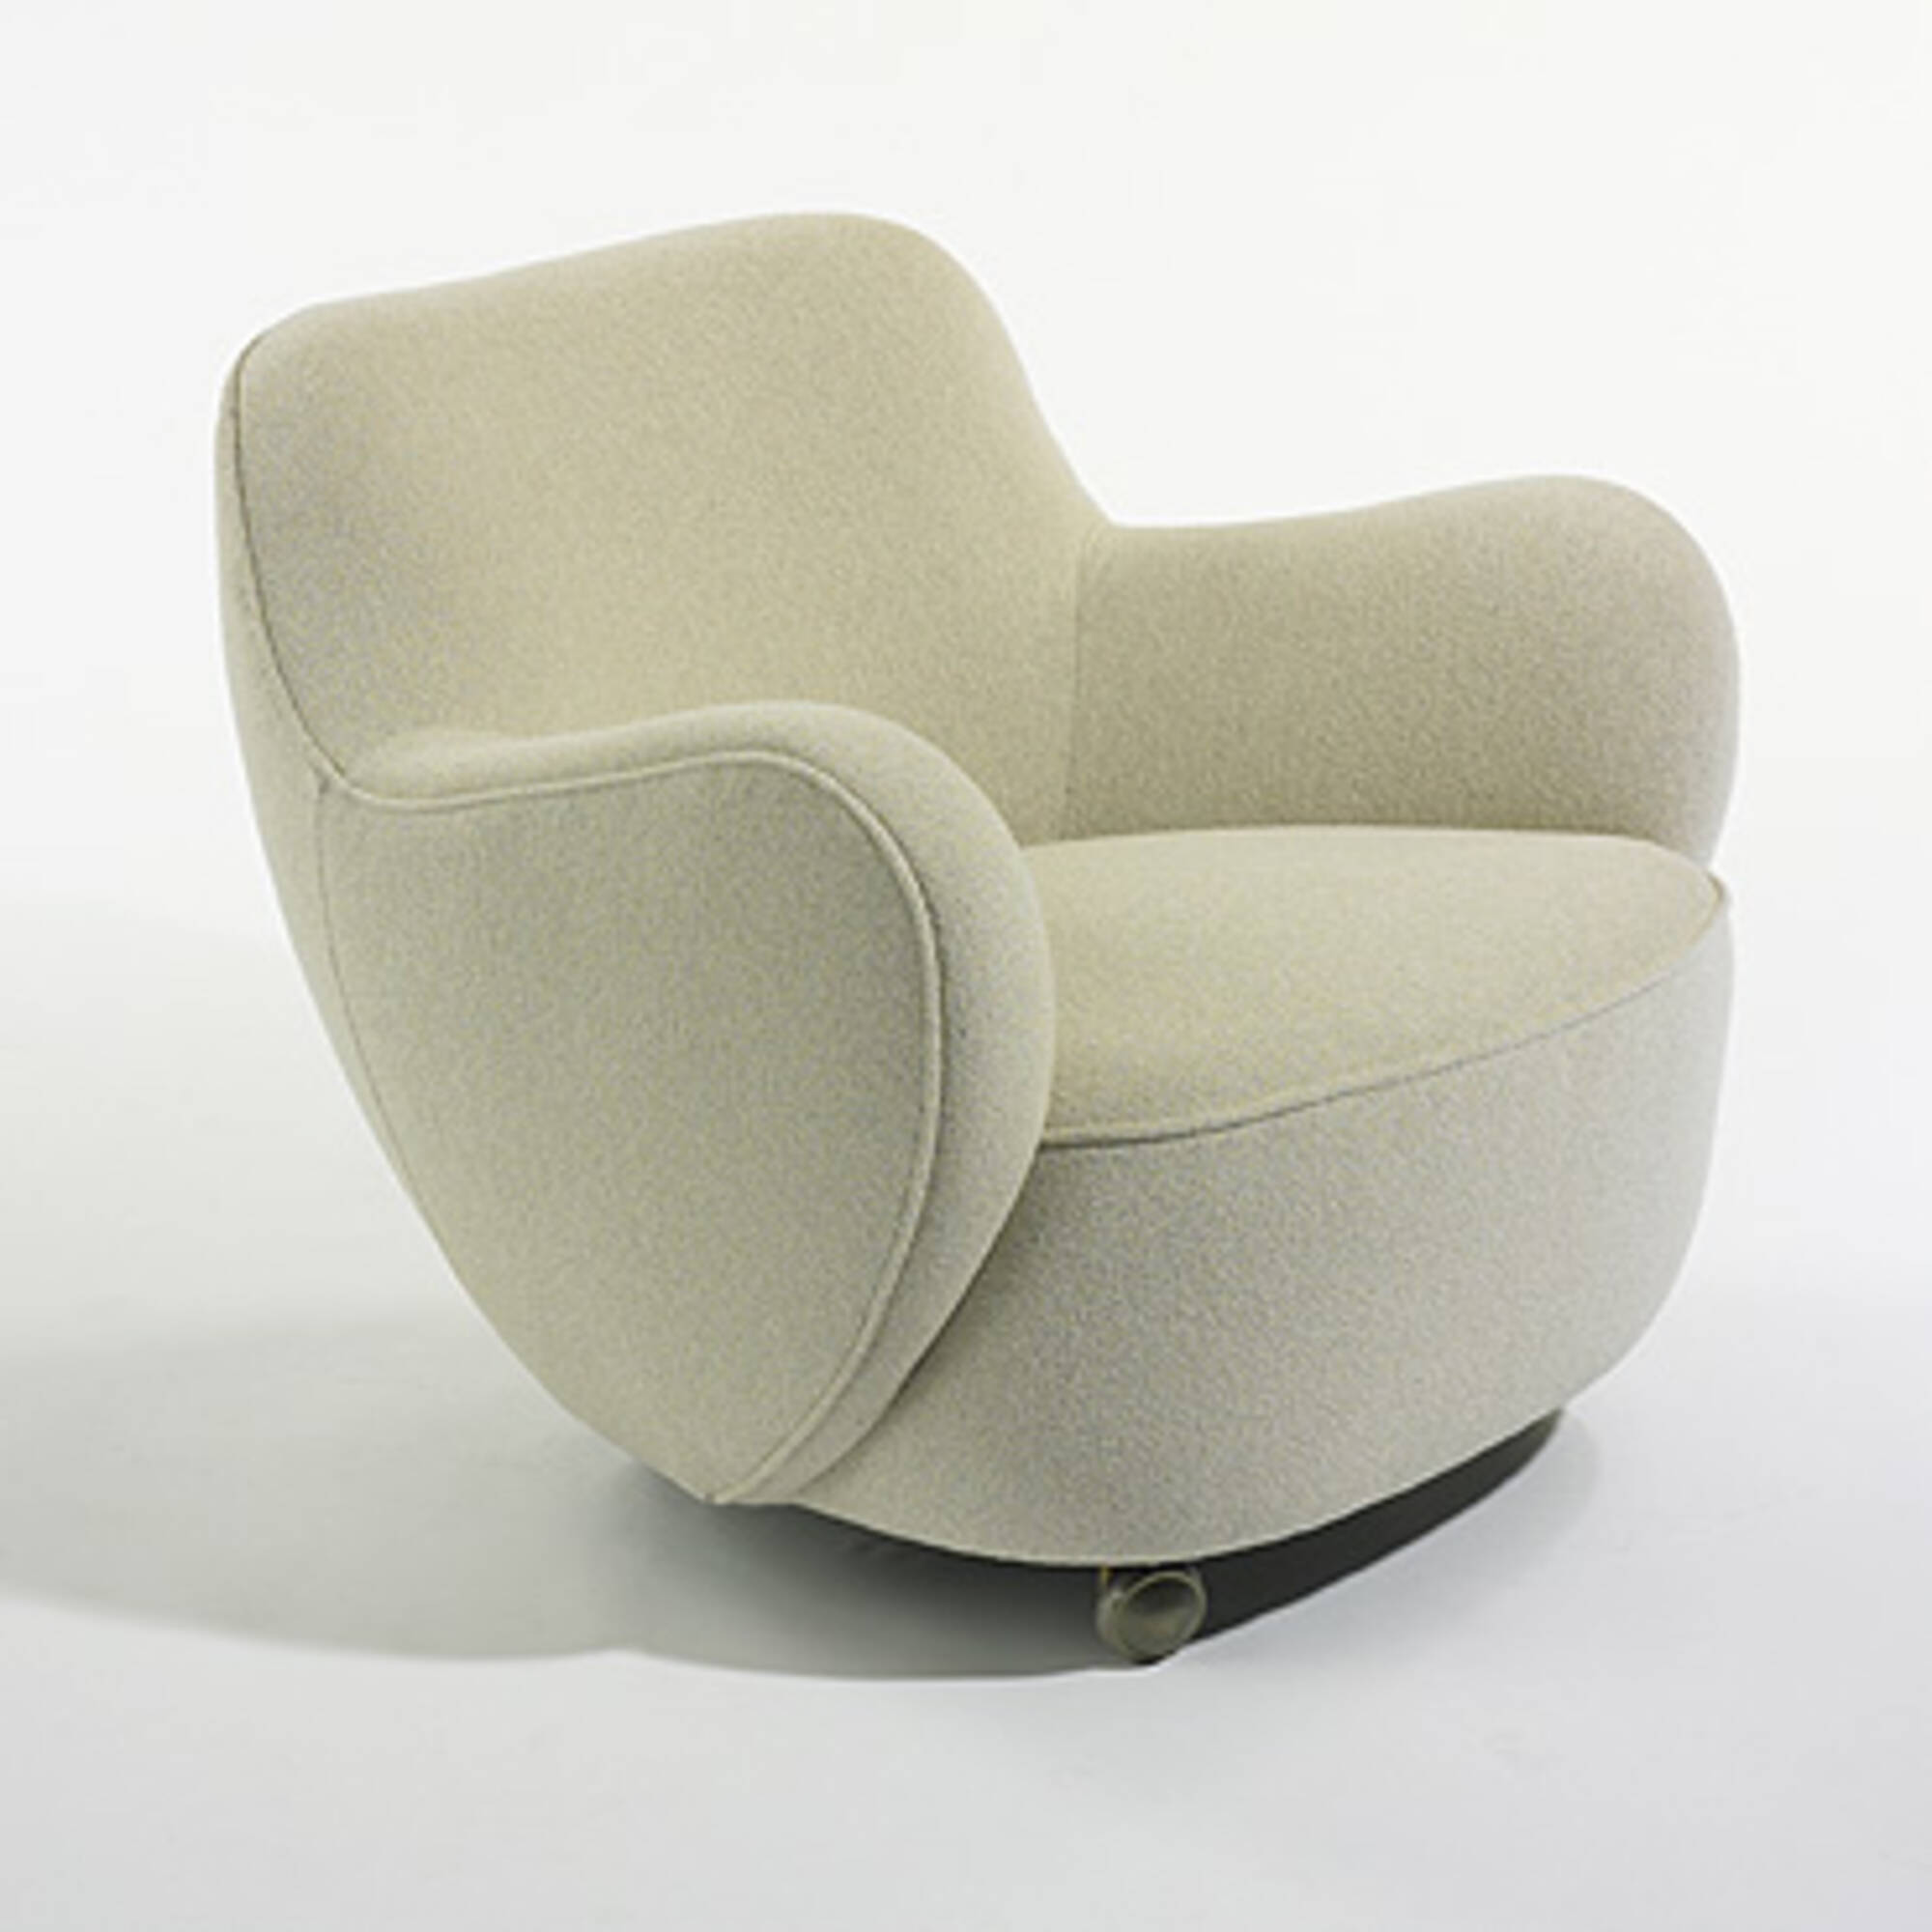 237: VLADIMIR KAGAN, Barrel chair, model 100A